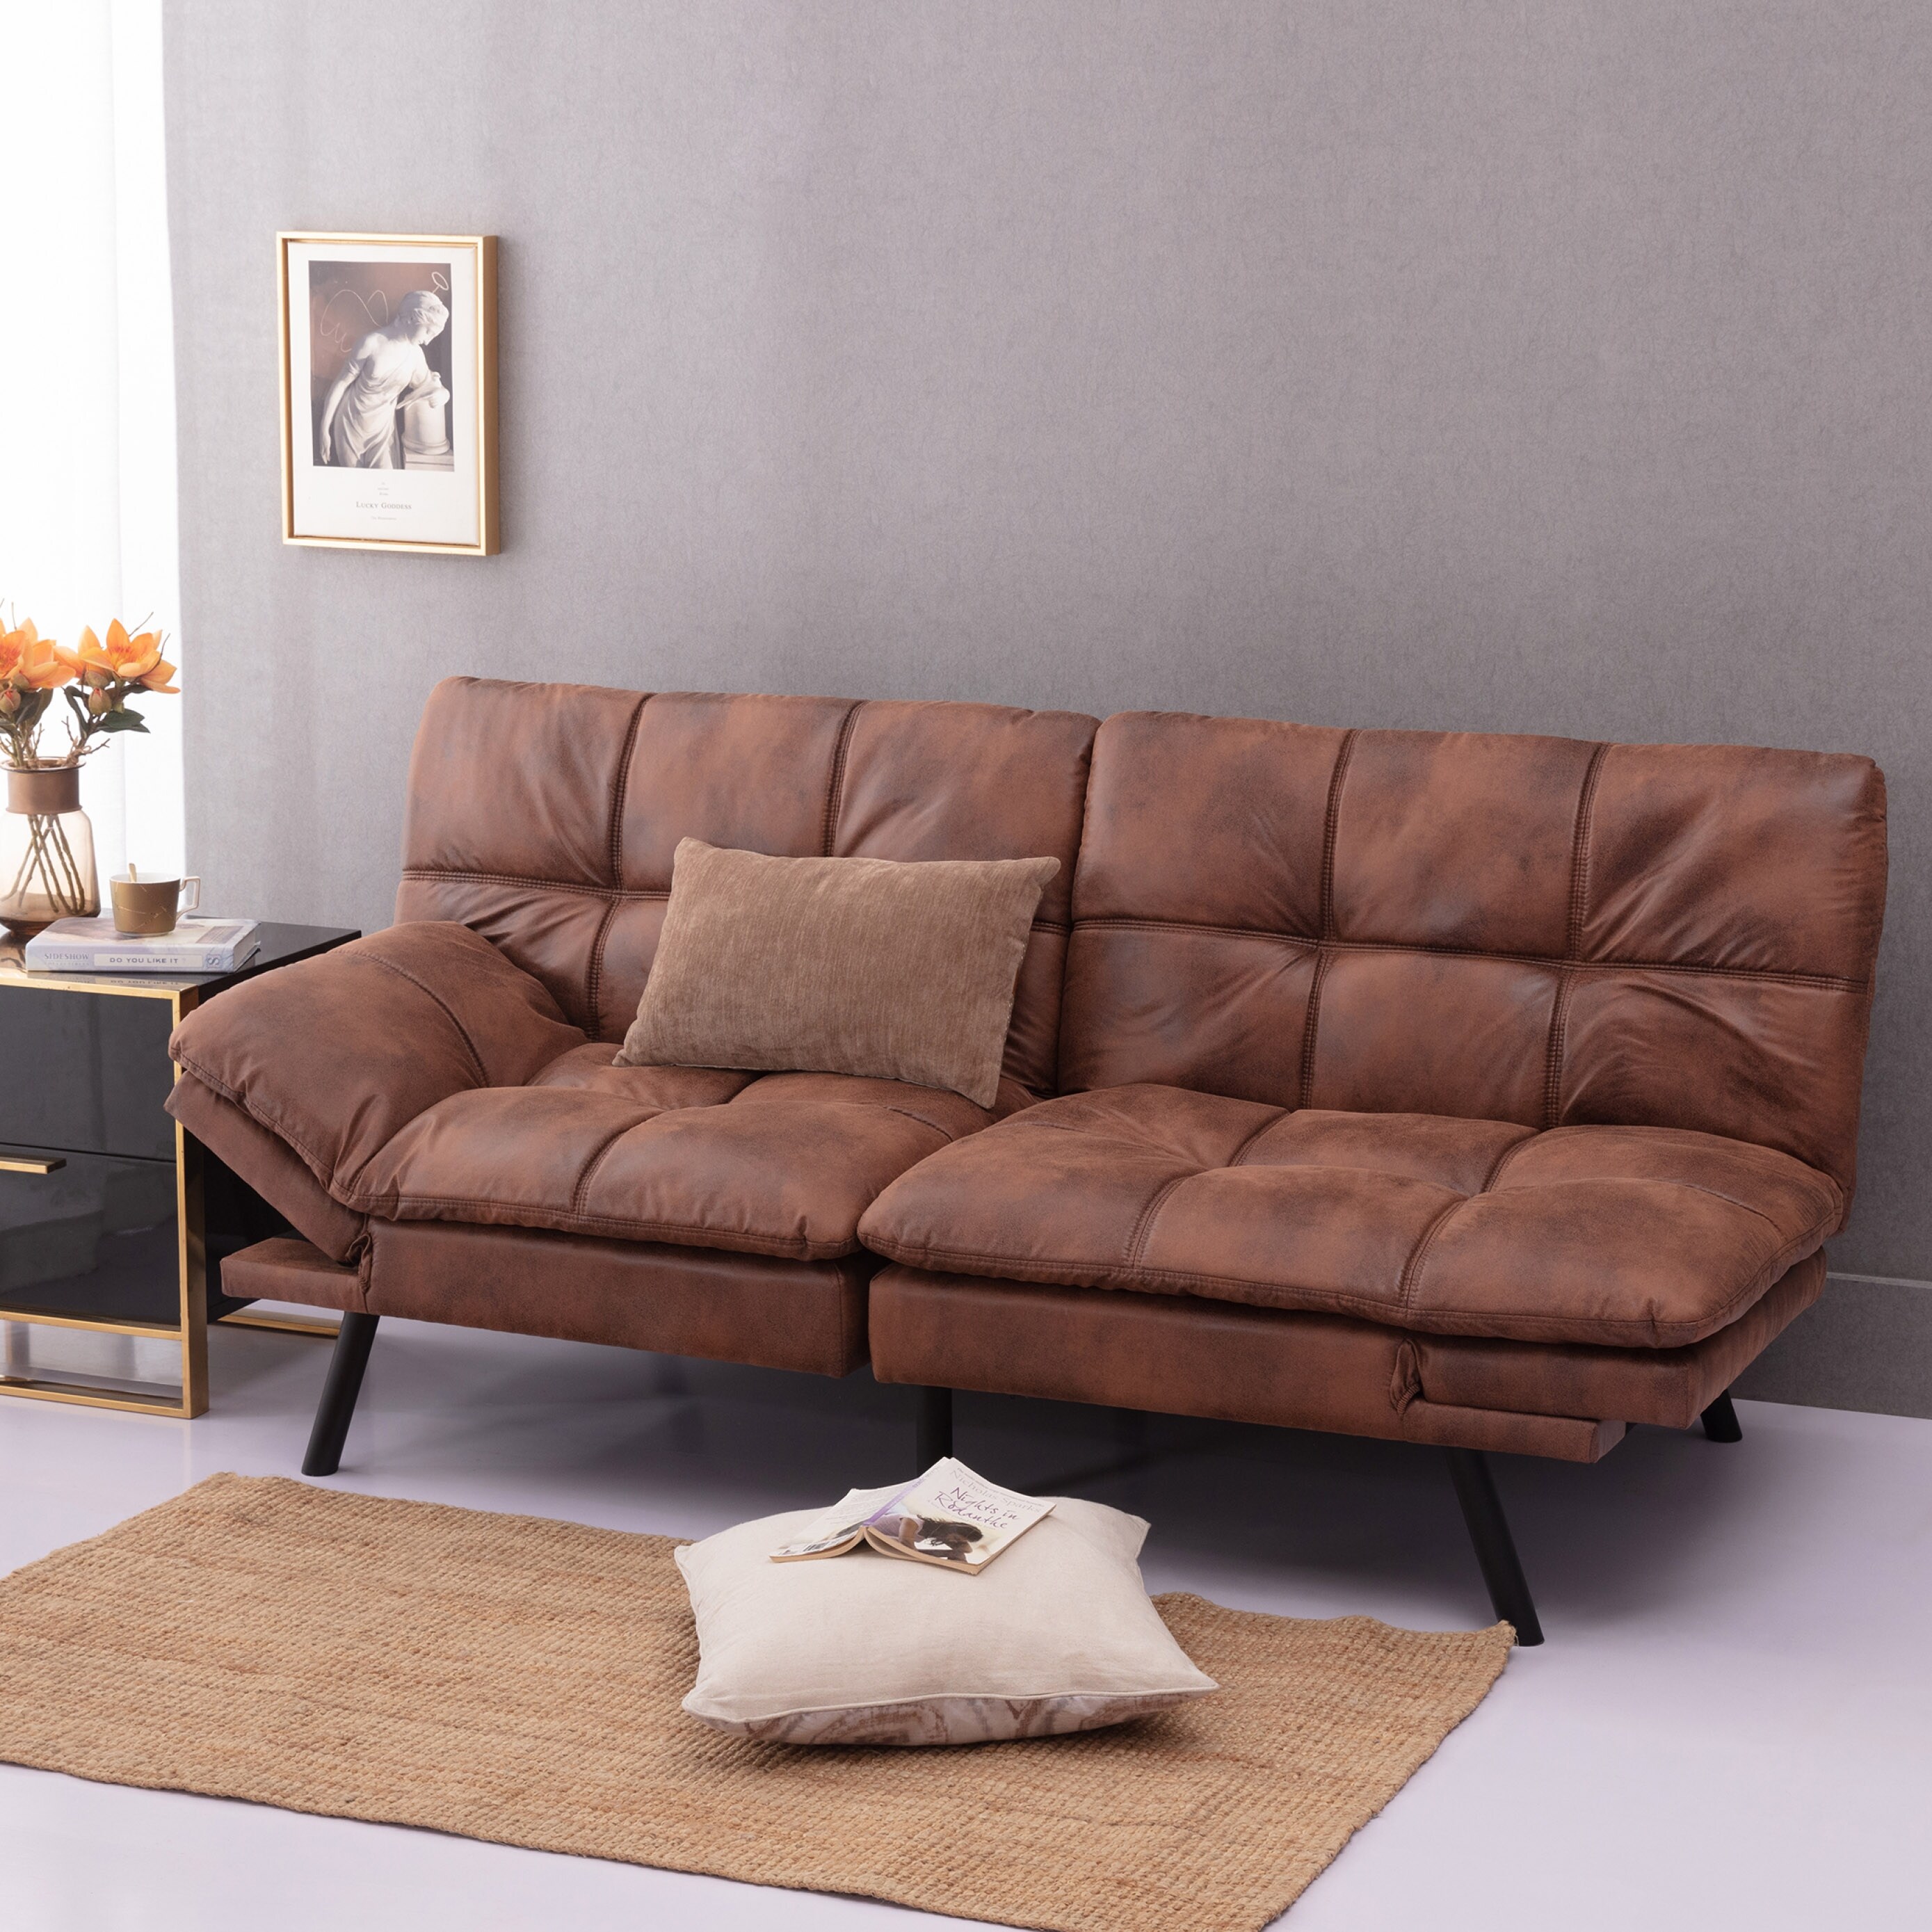 Futon Sofa Bed – Sleeper Convertible Futon Couch, Memory Foam